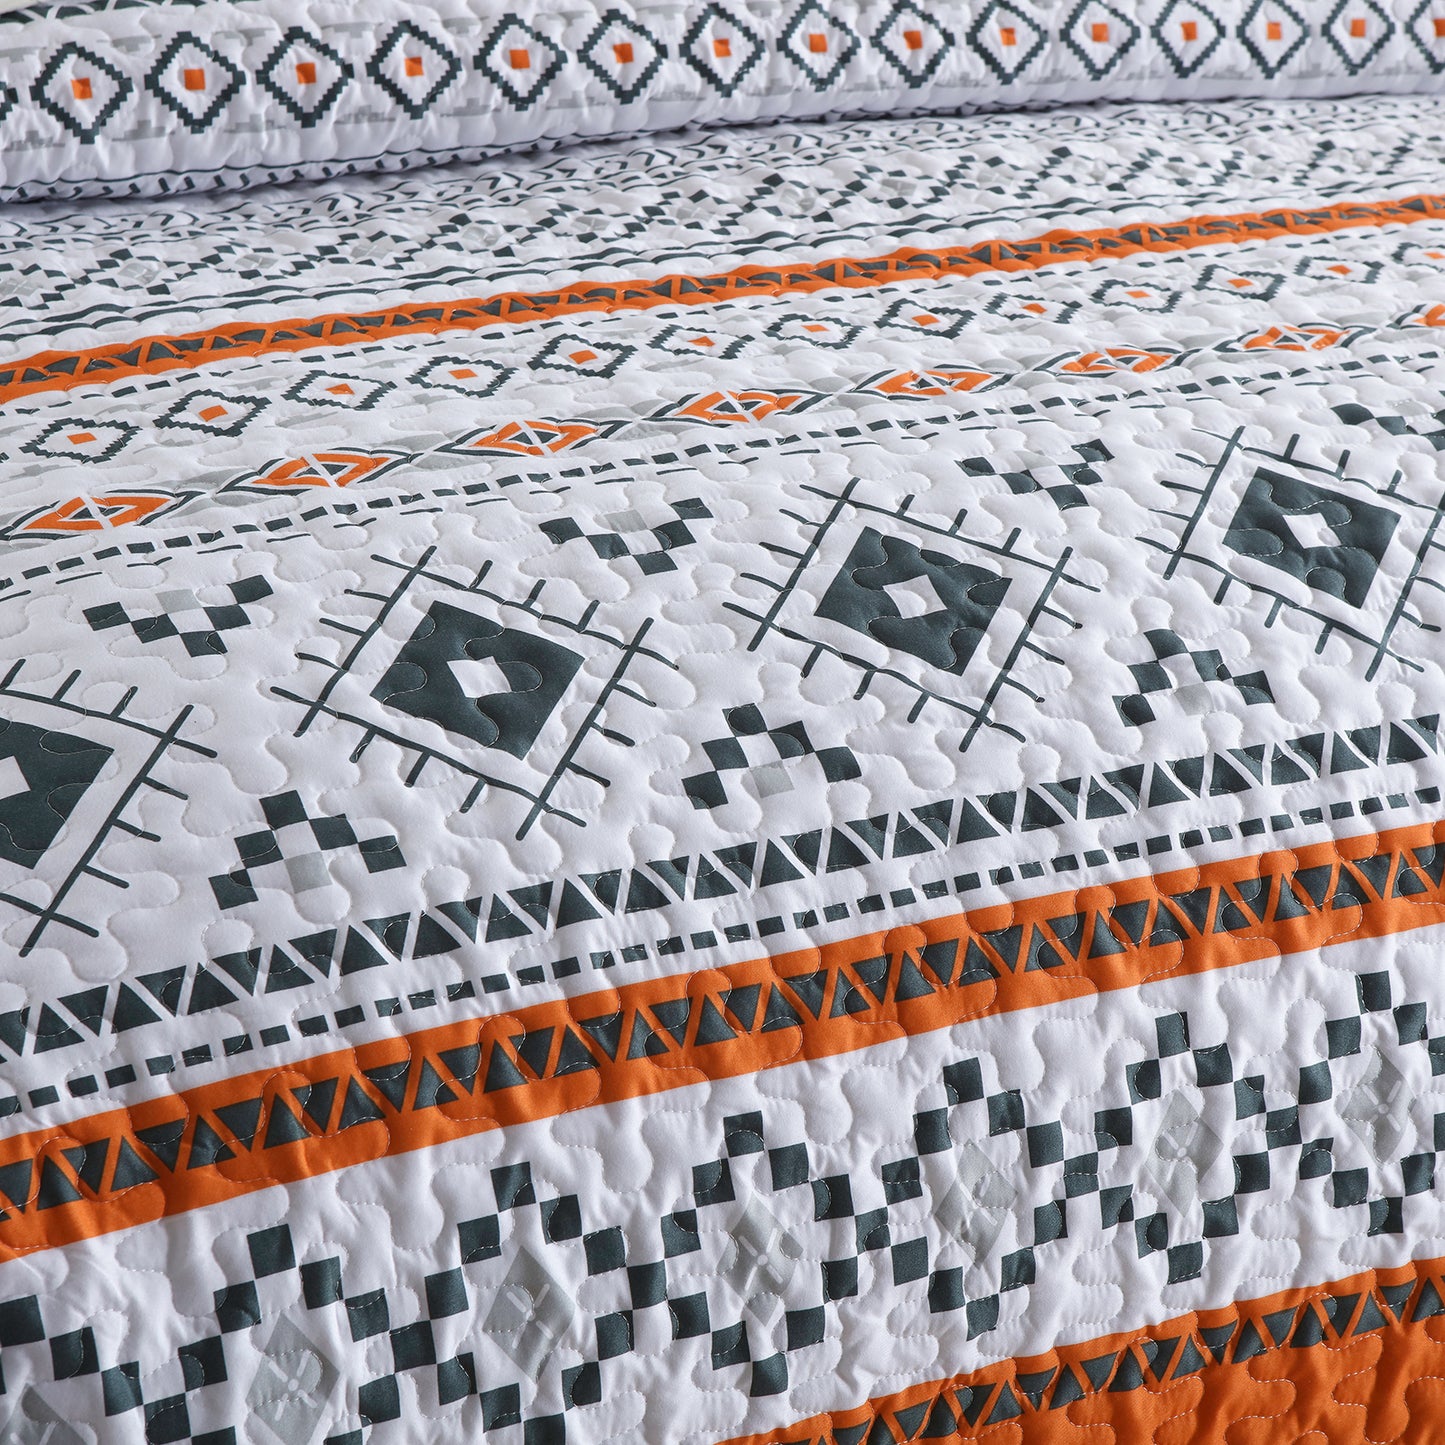 Bohemian stripes 3 Pieces Boho Quilt Se  with 2 Pillowcases